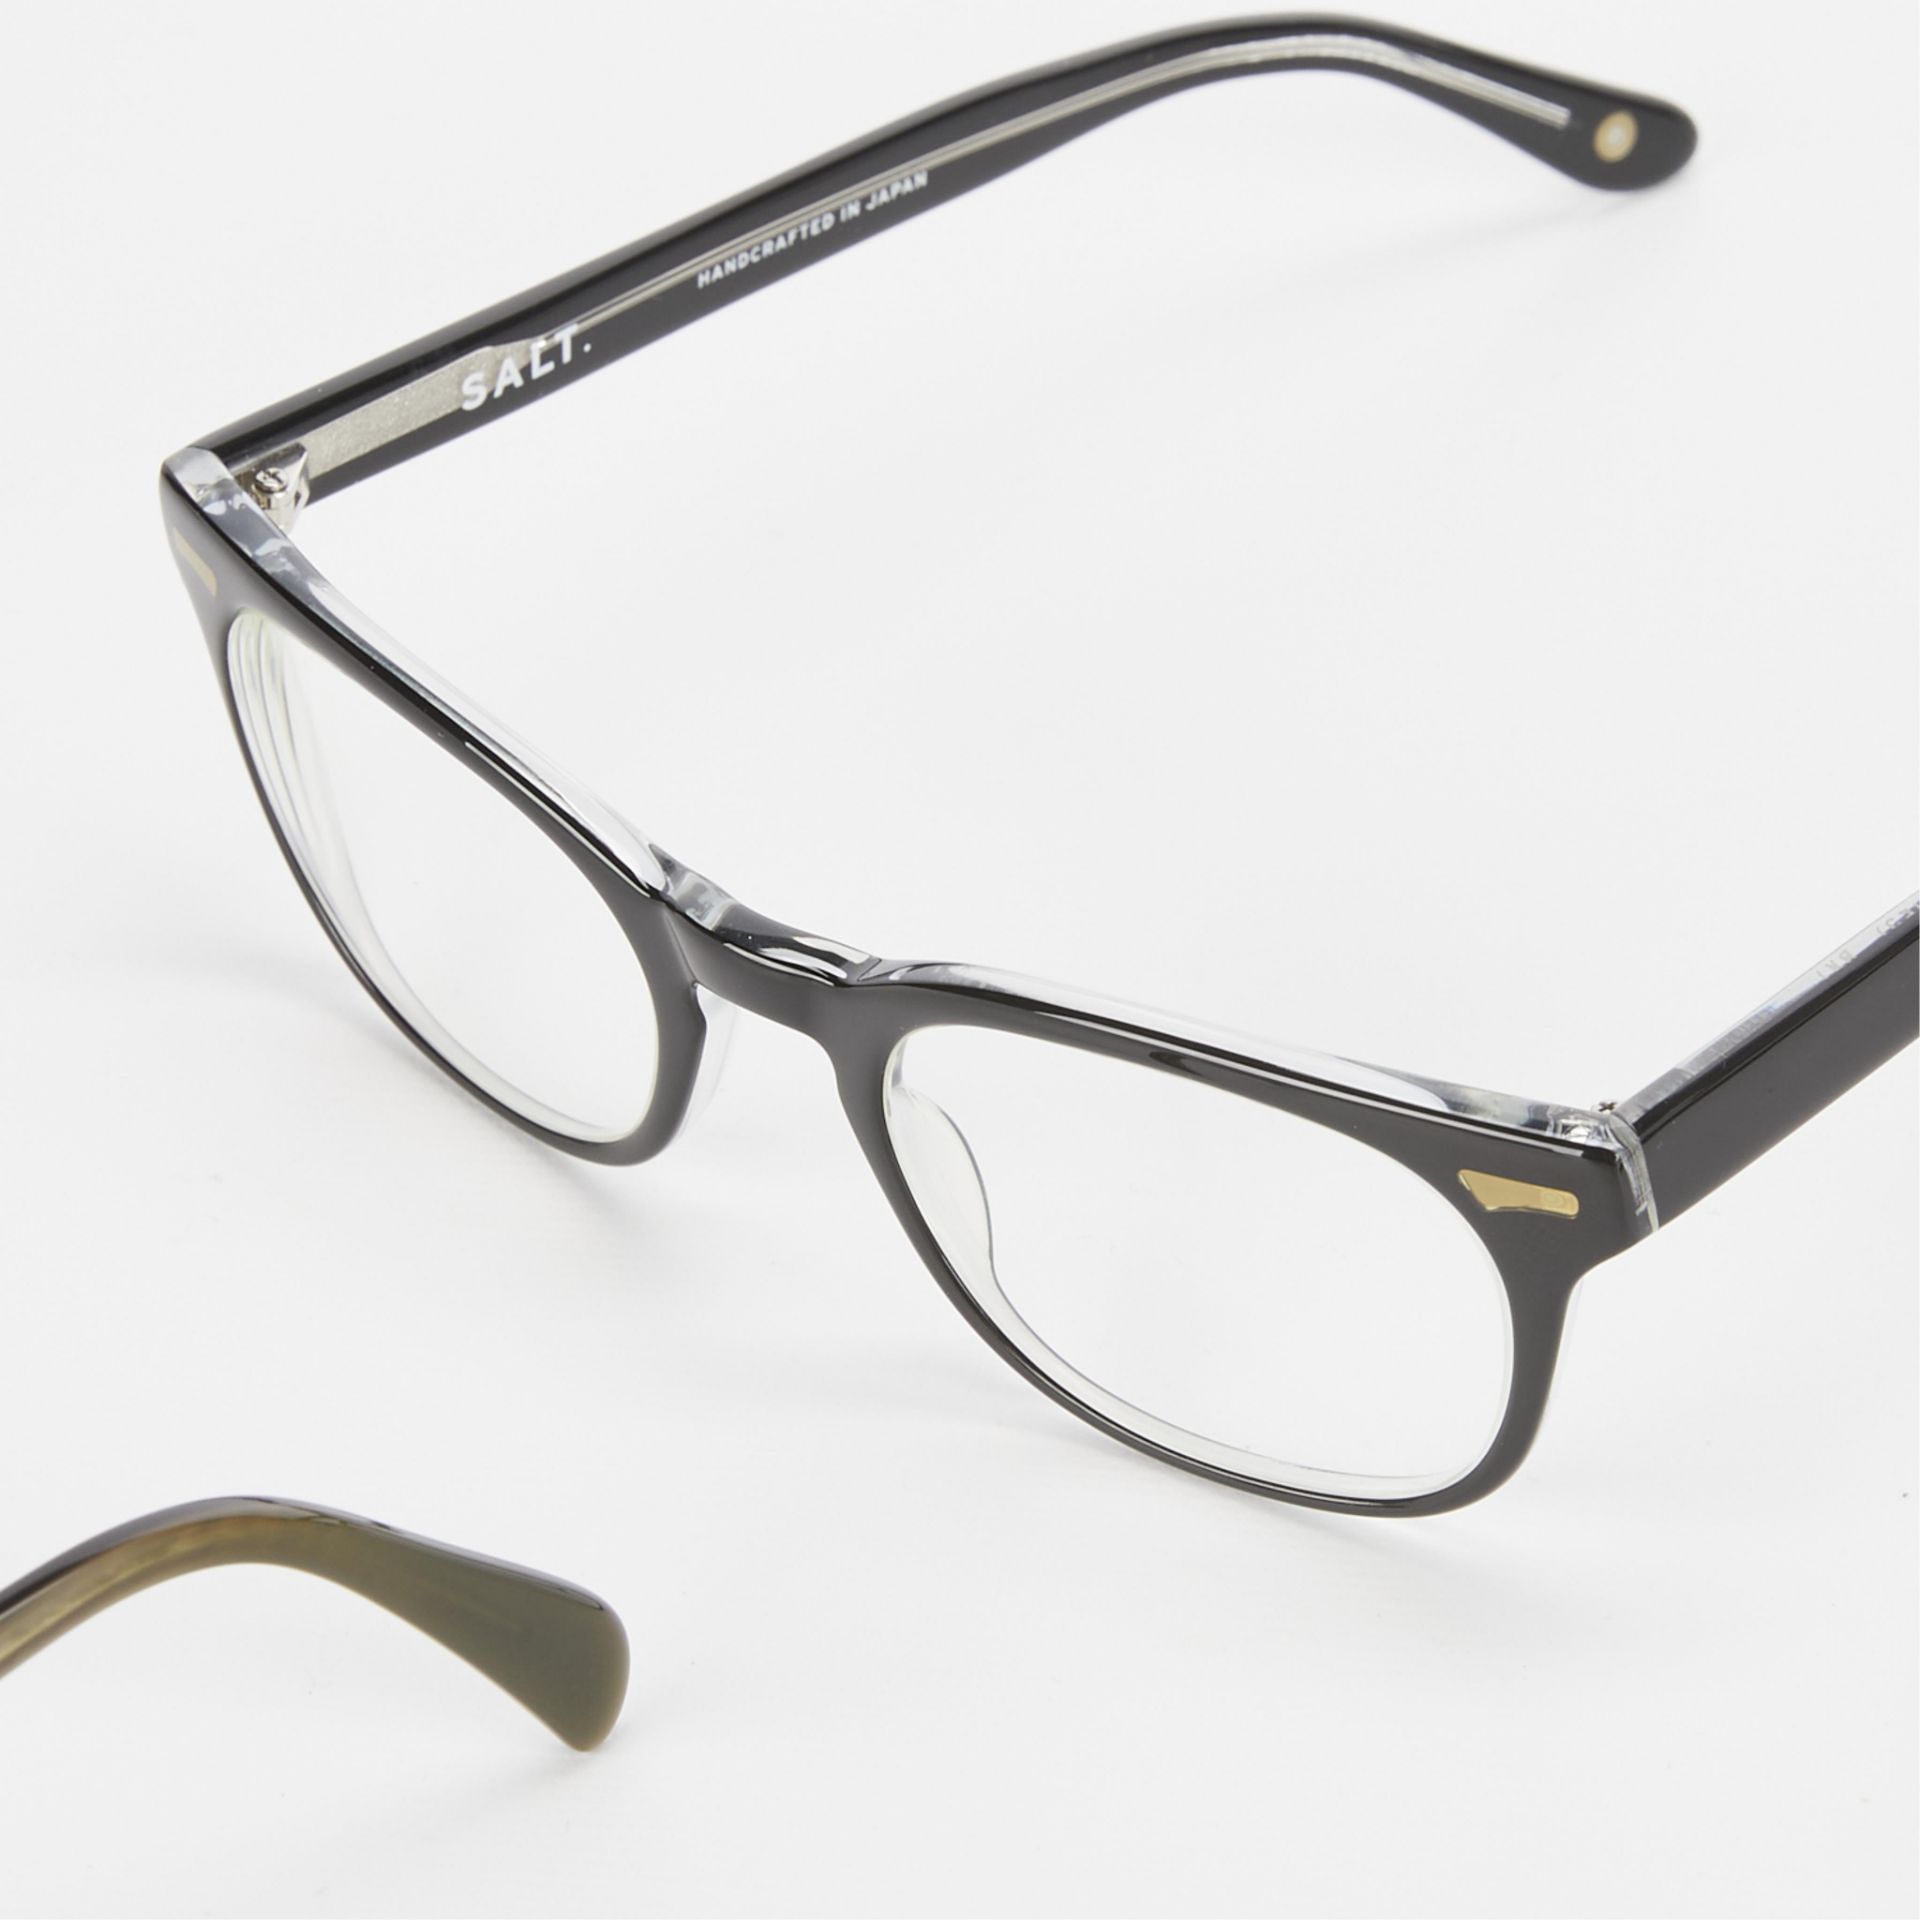 Grp of 8 SALT Eyeglasses - Image 8 of 11